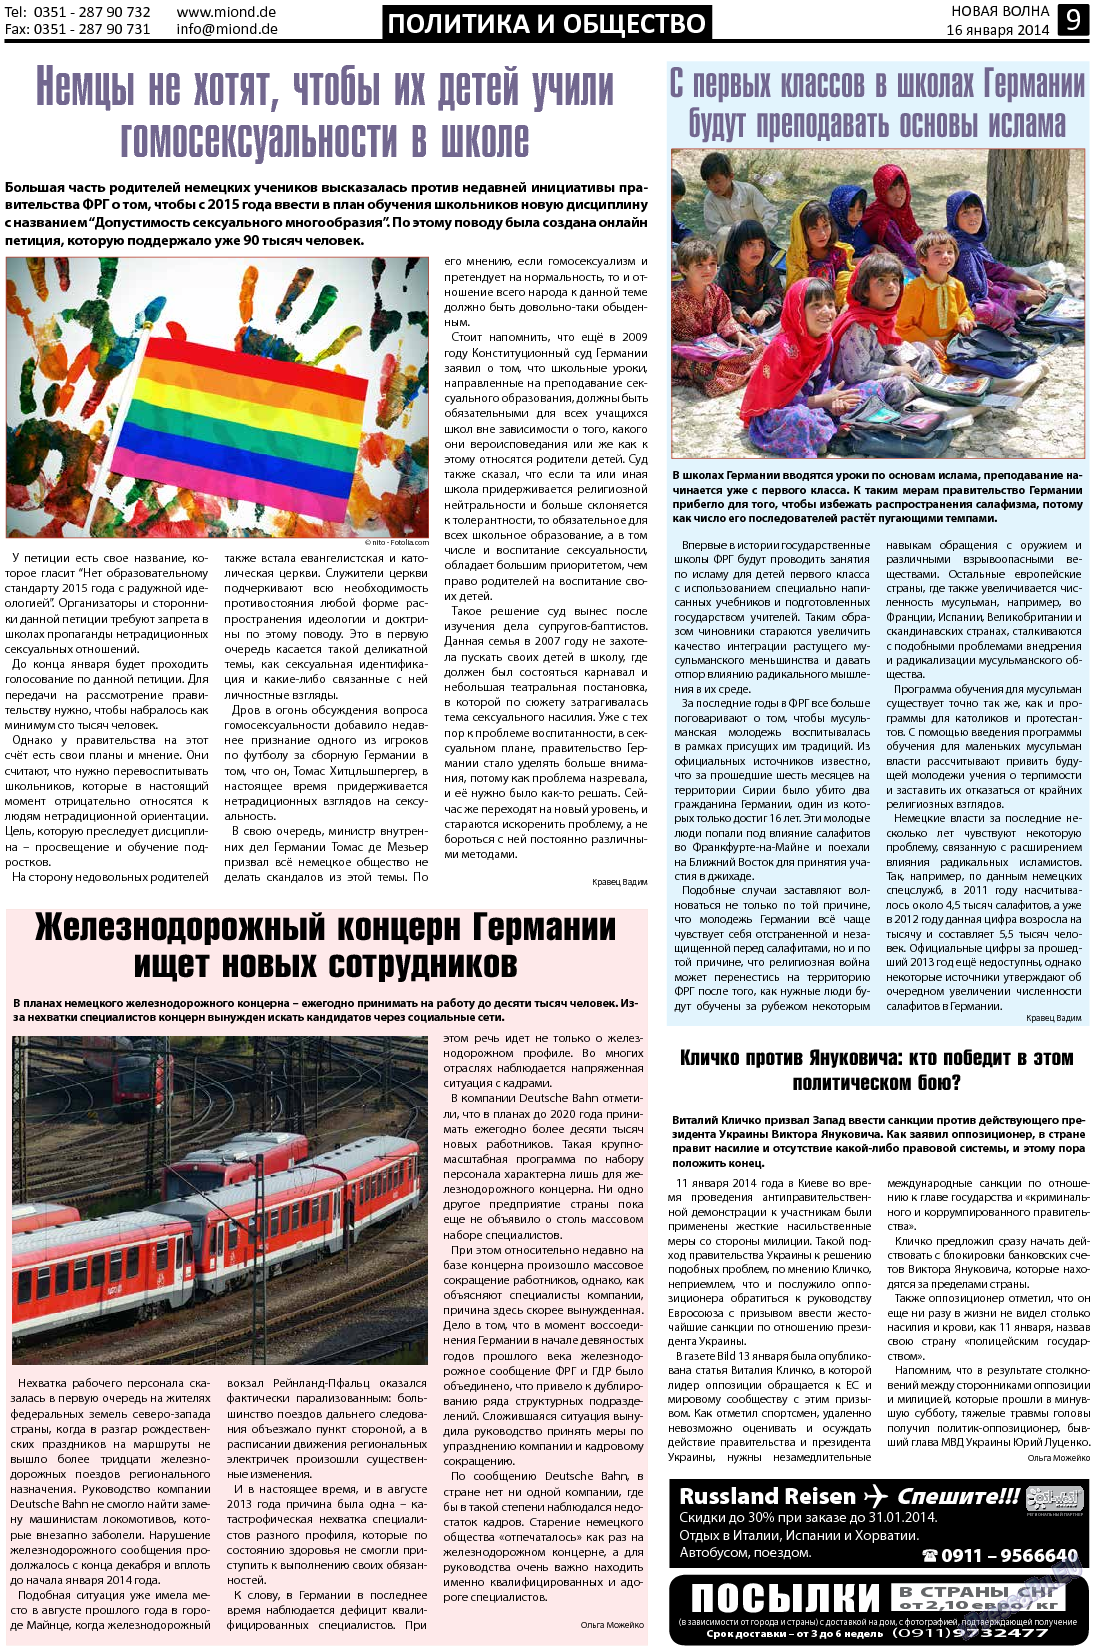 Новая Wолна, газета. 2014 №3 стр.9